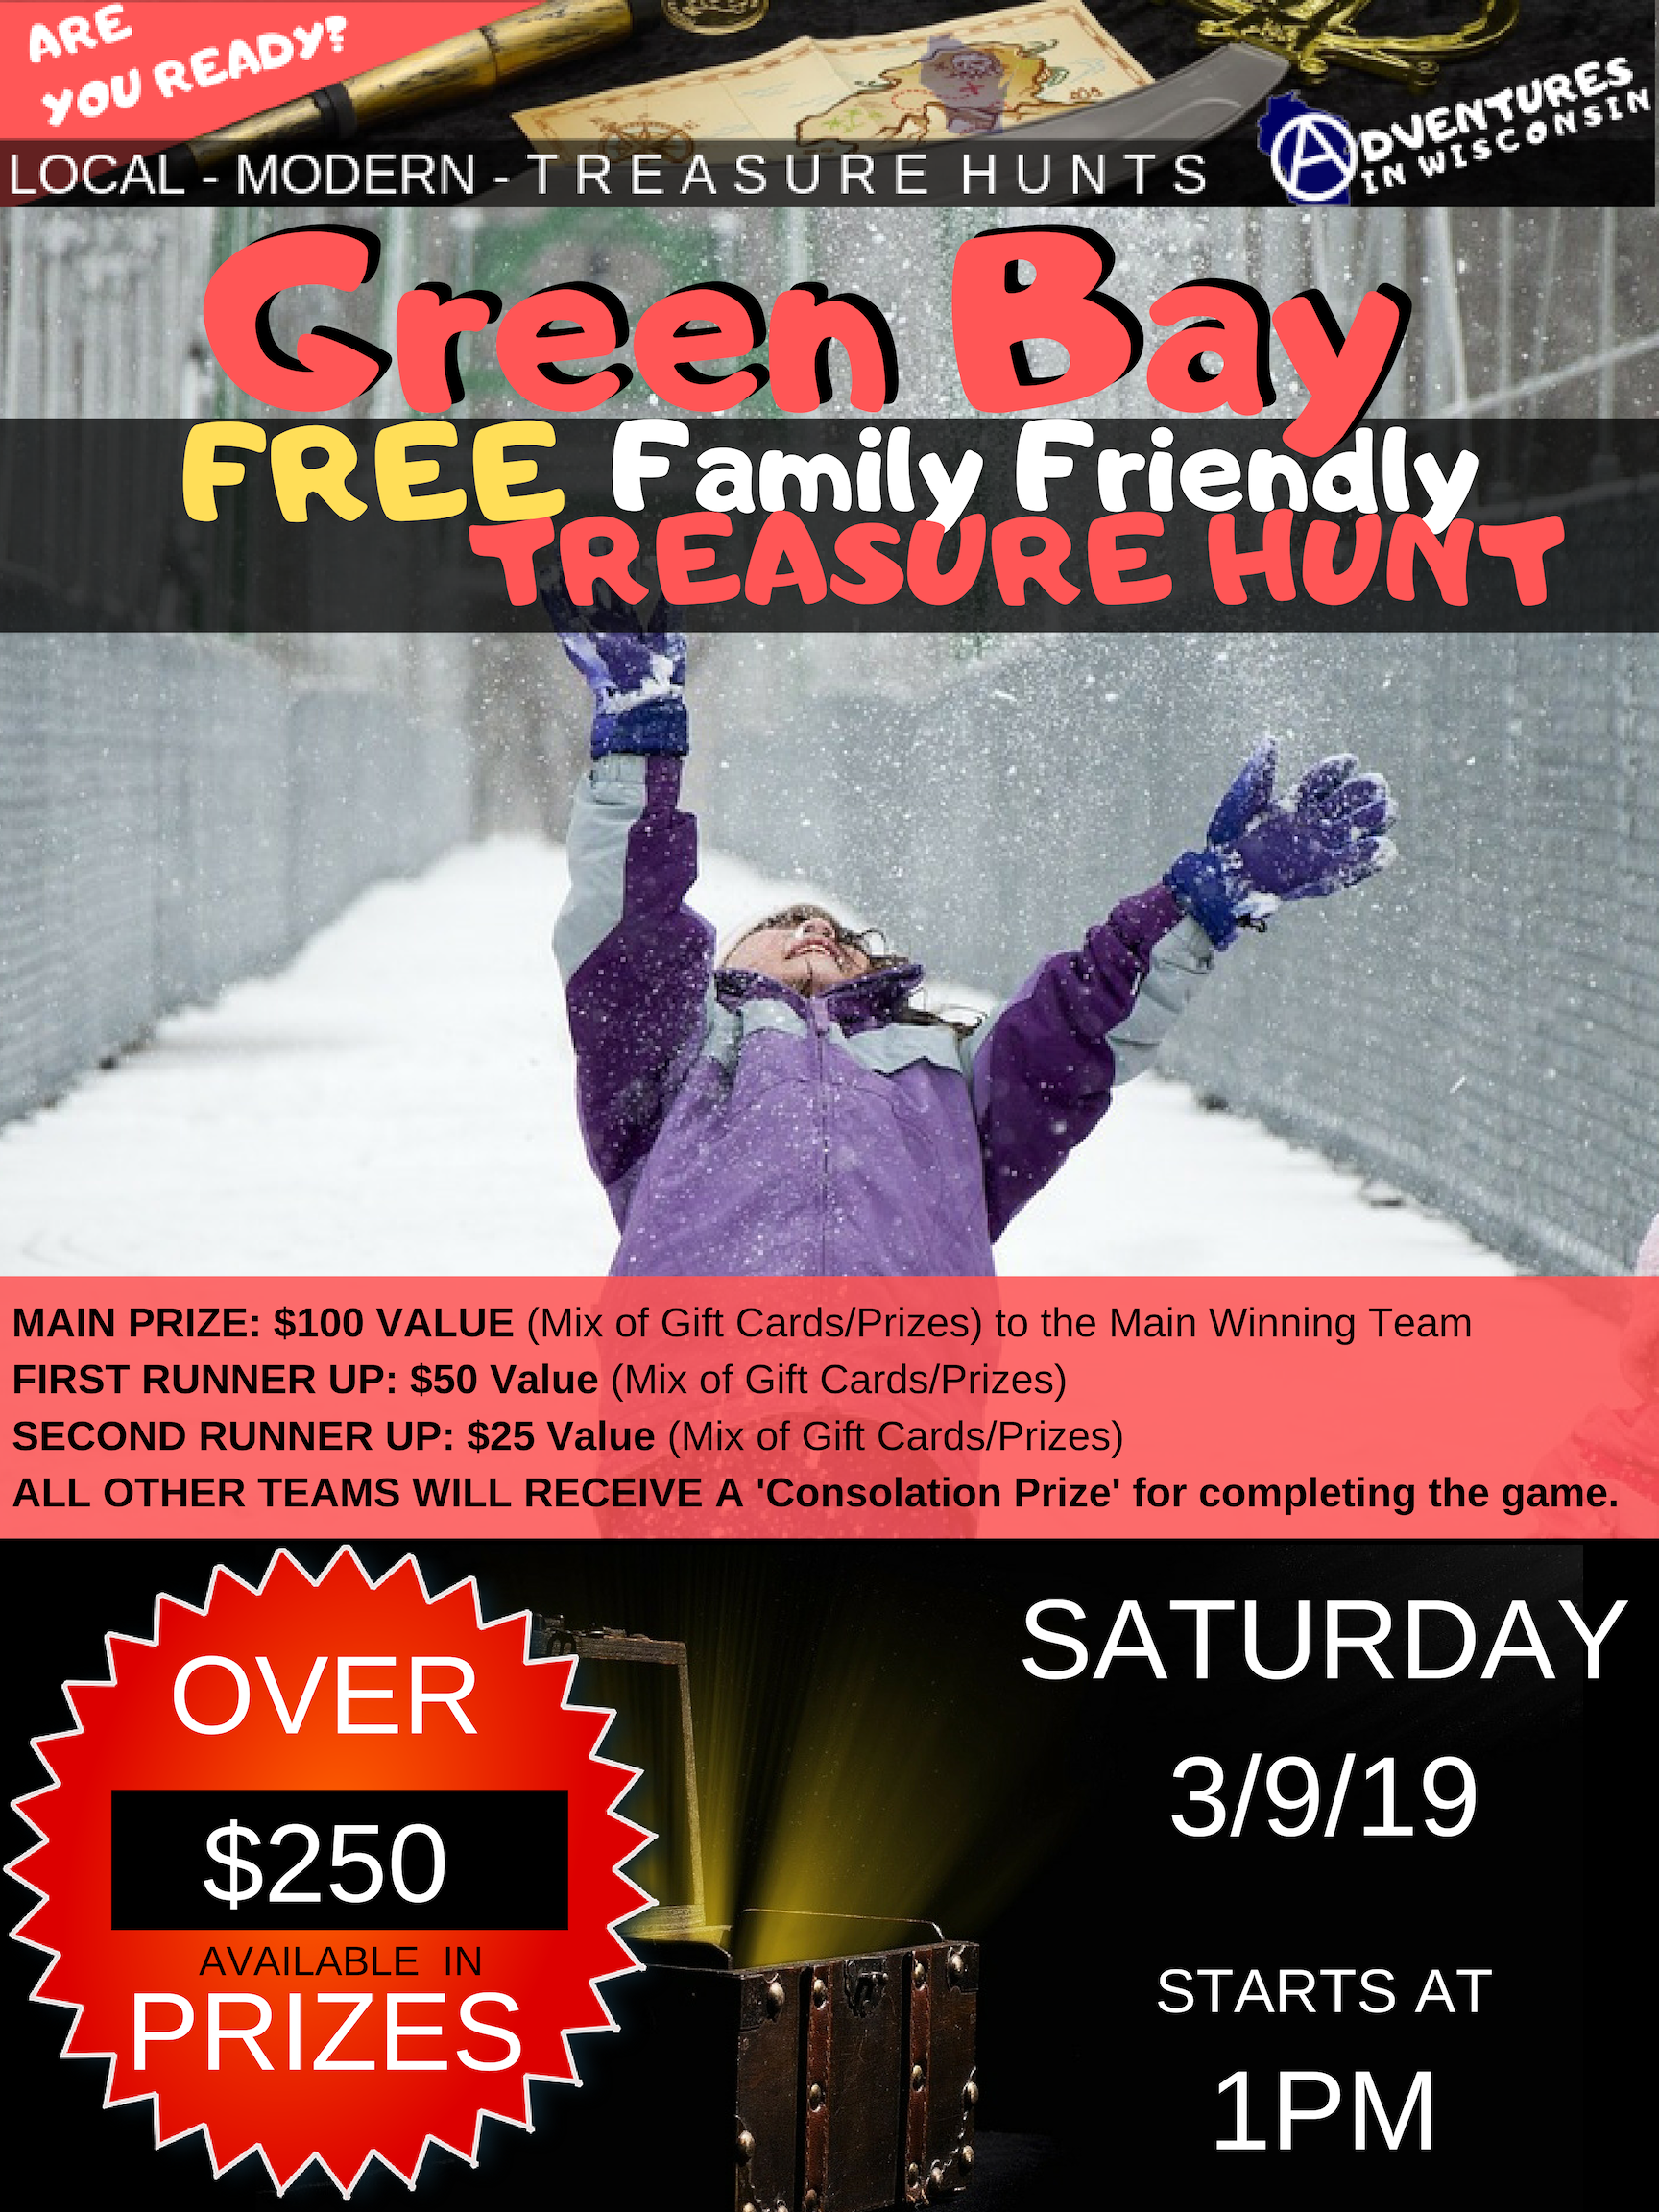 Free Family Friendly Treasure Hunt in Green Bay on Saturday 3/9/19